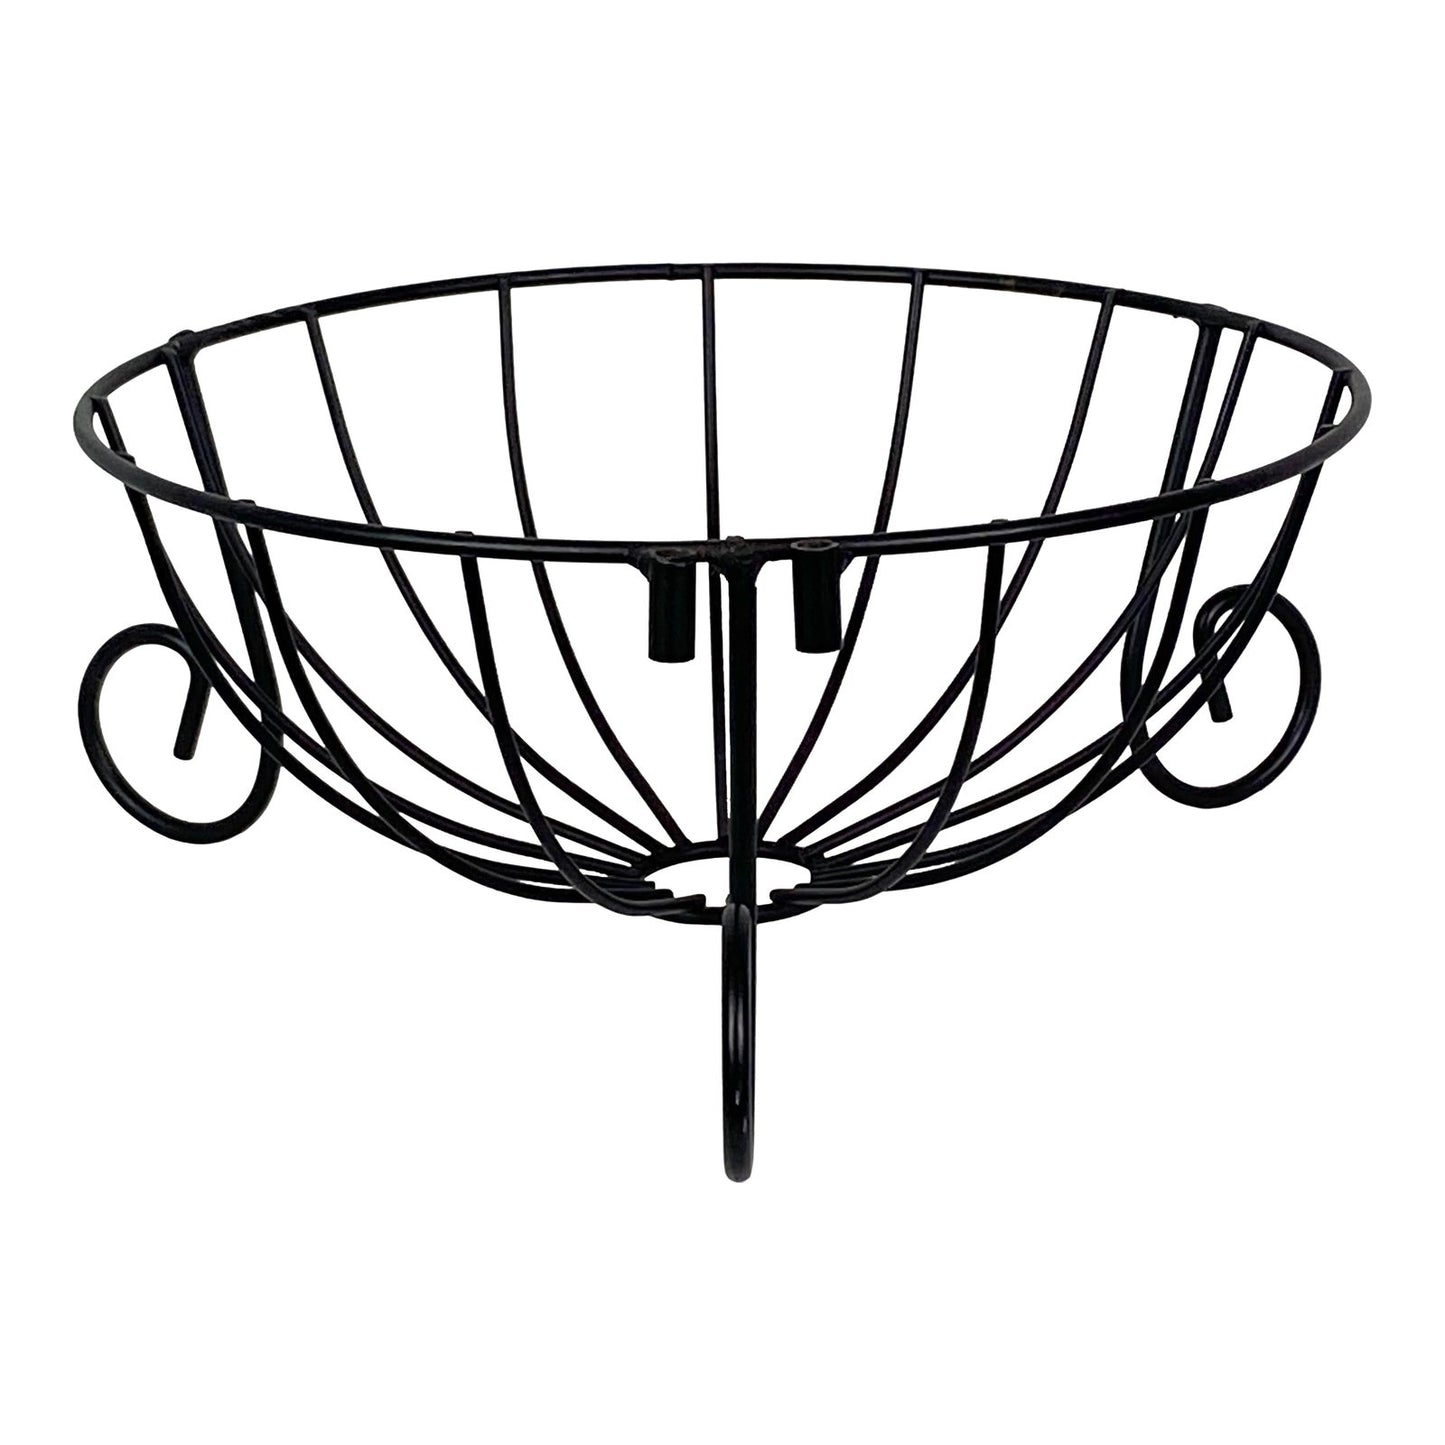 [SOLD] Black Wrought Iron Metal Wire Fruit Basket